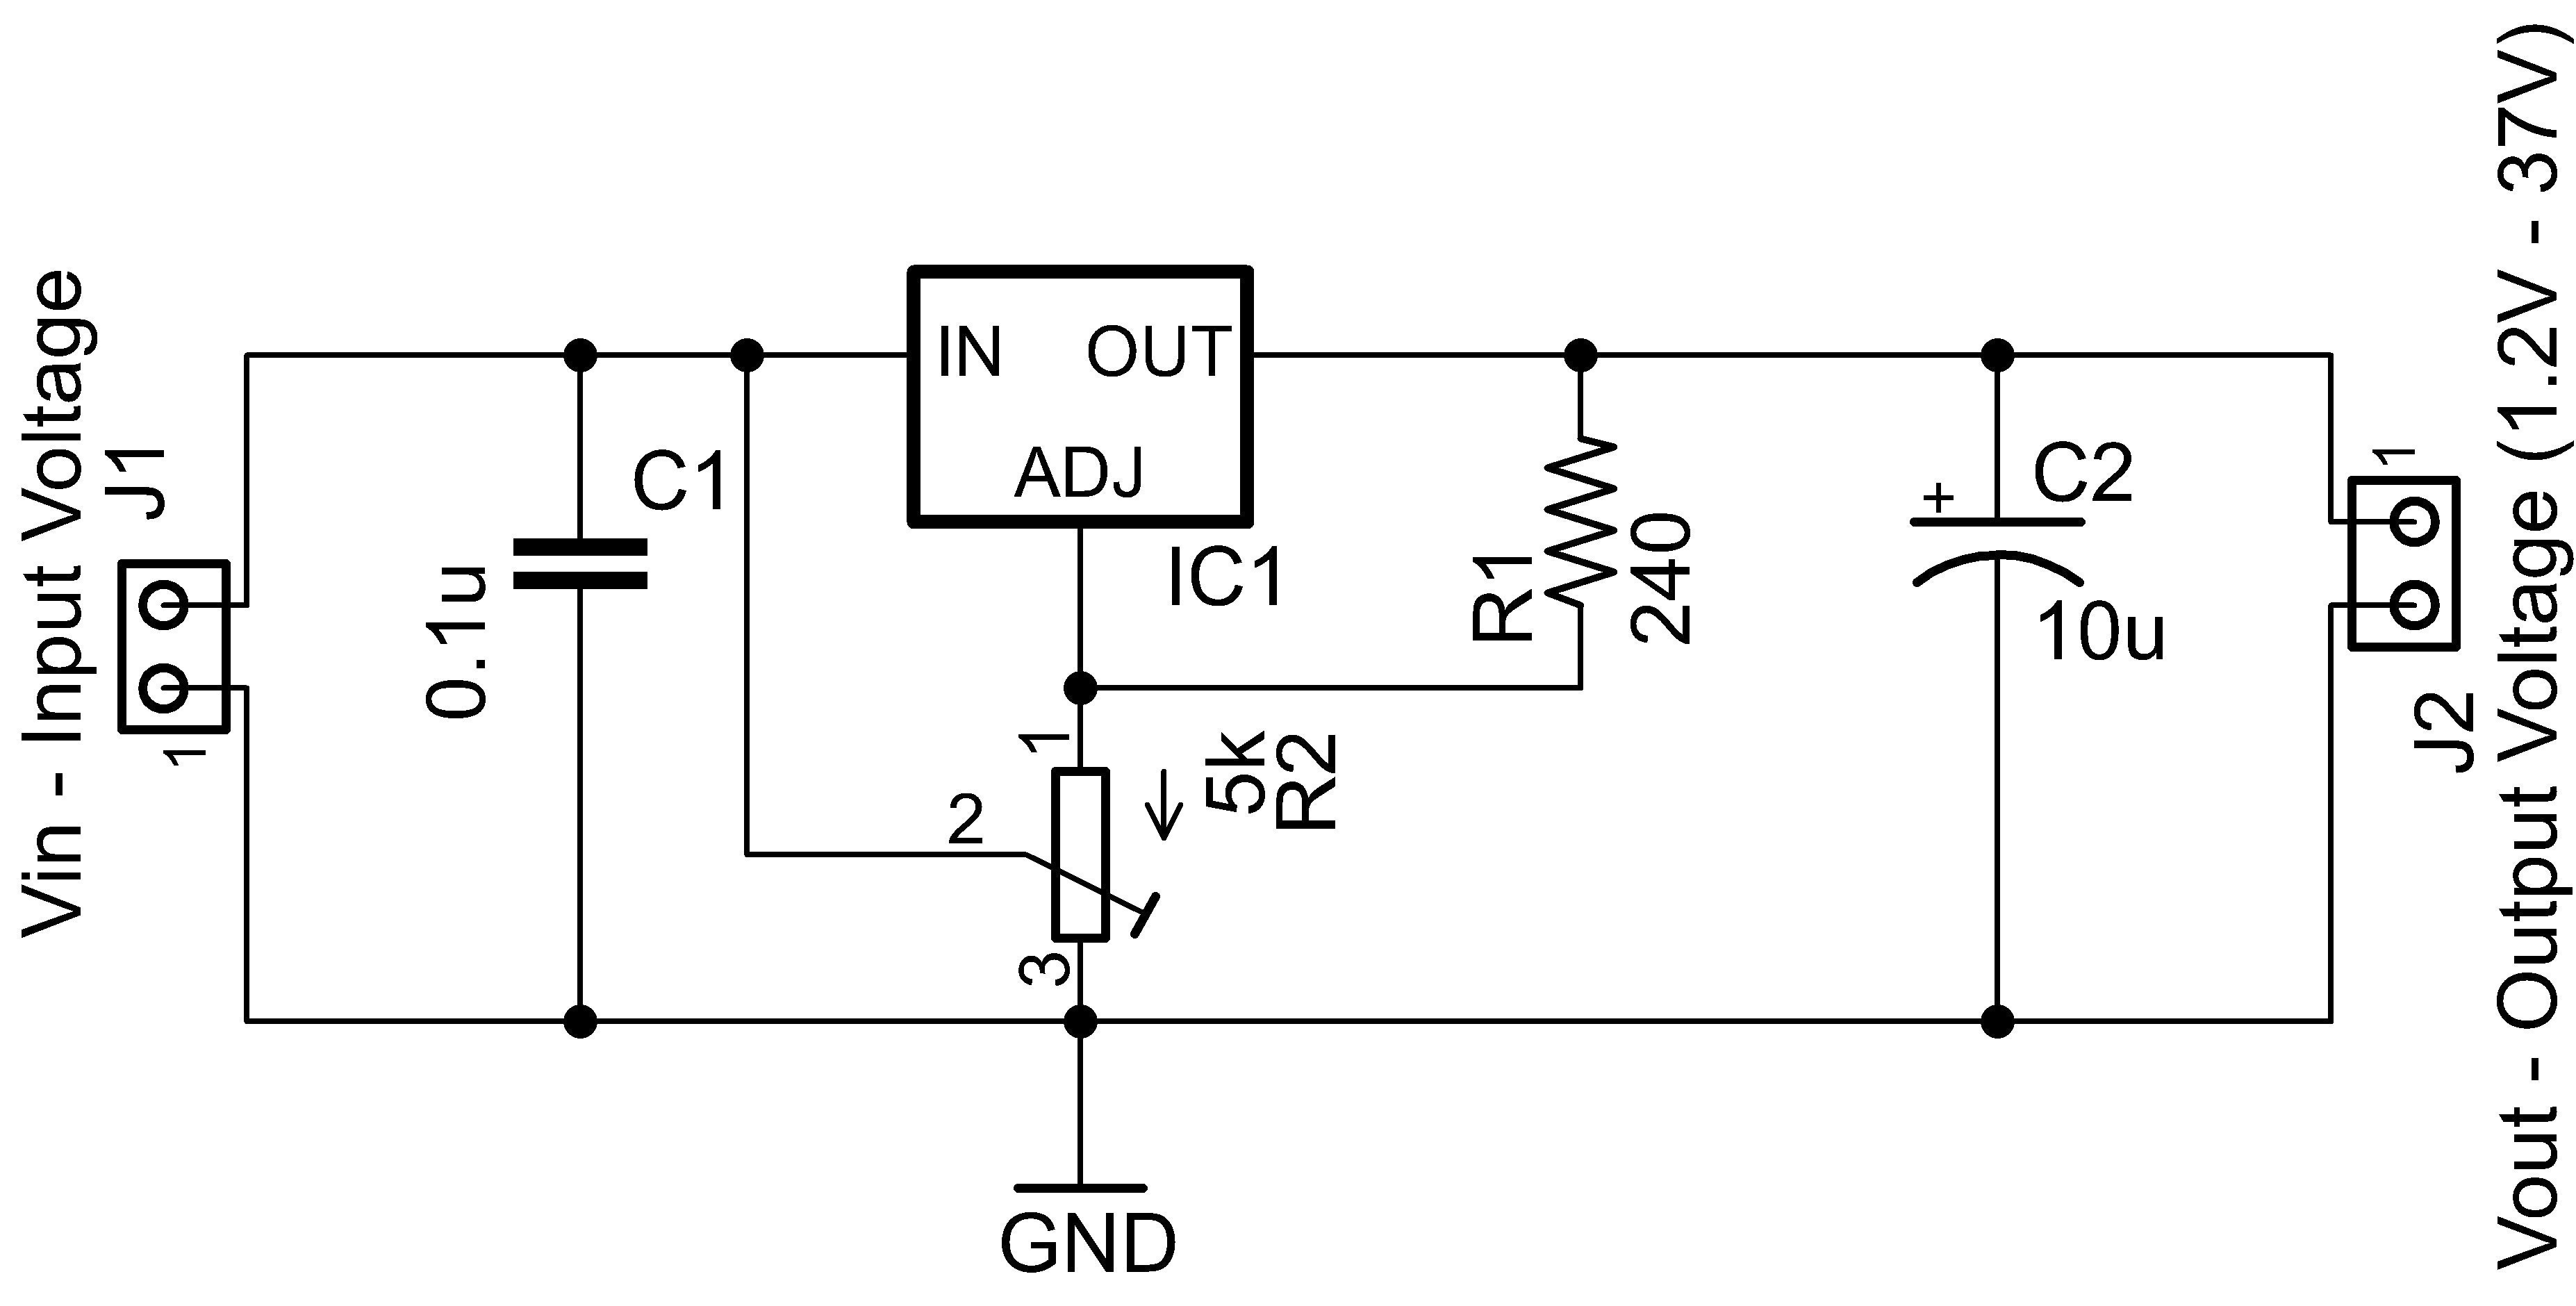 Auto Alternator Wiring Diagram Inspirationa Wiring Diagram Alternator Voltage Regulator Fresh 4 Wire Alternator